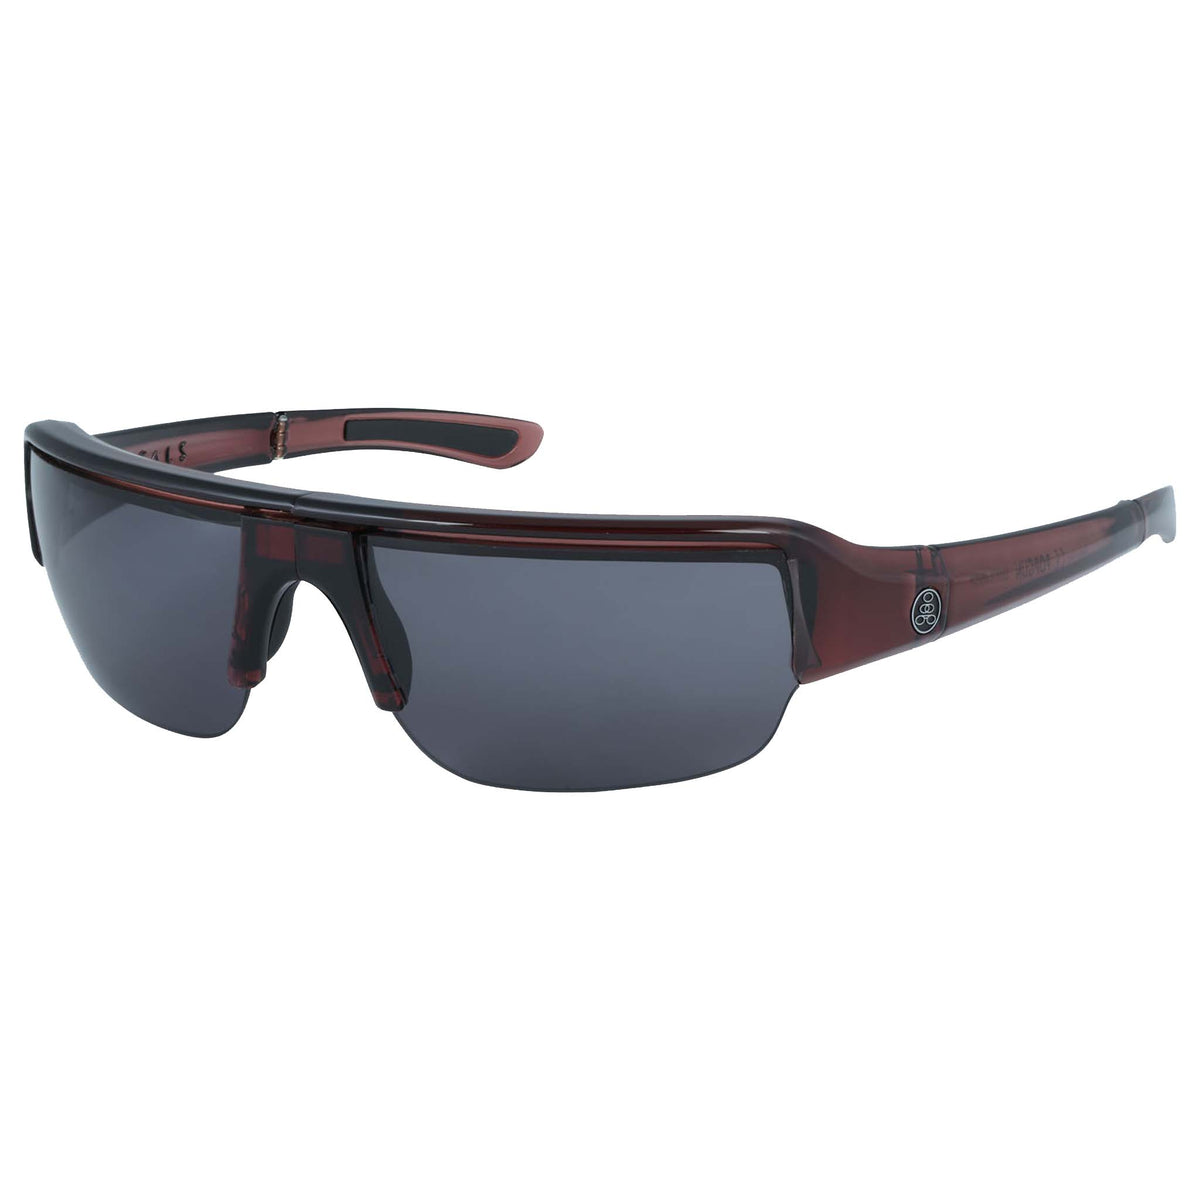 Popticals, Premium Compact Sunglasses, PopGun, 020010-WXGP, Polarized Sunglasses, Gloss Wine Crystal Frame, Gray Lenses, Glam View